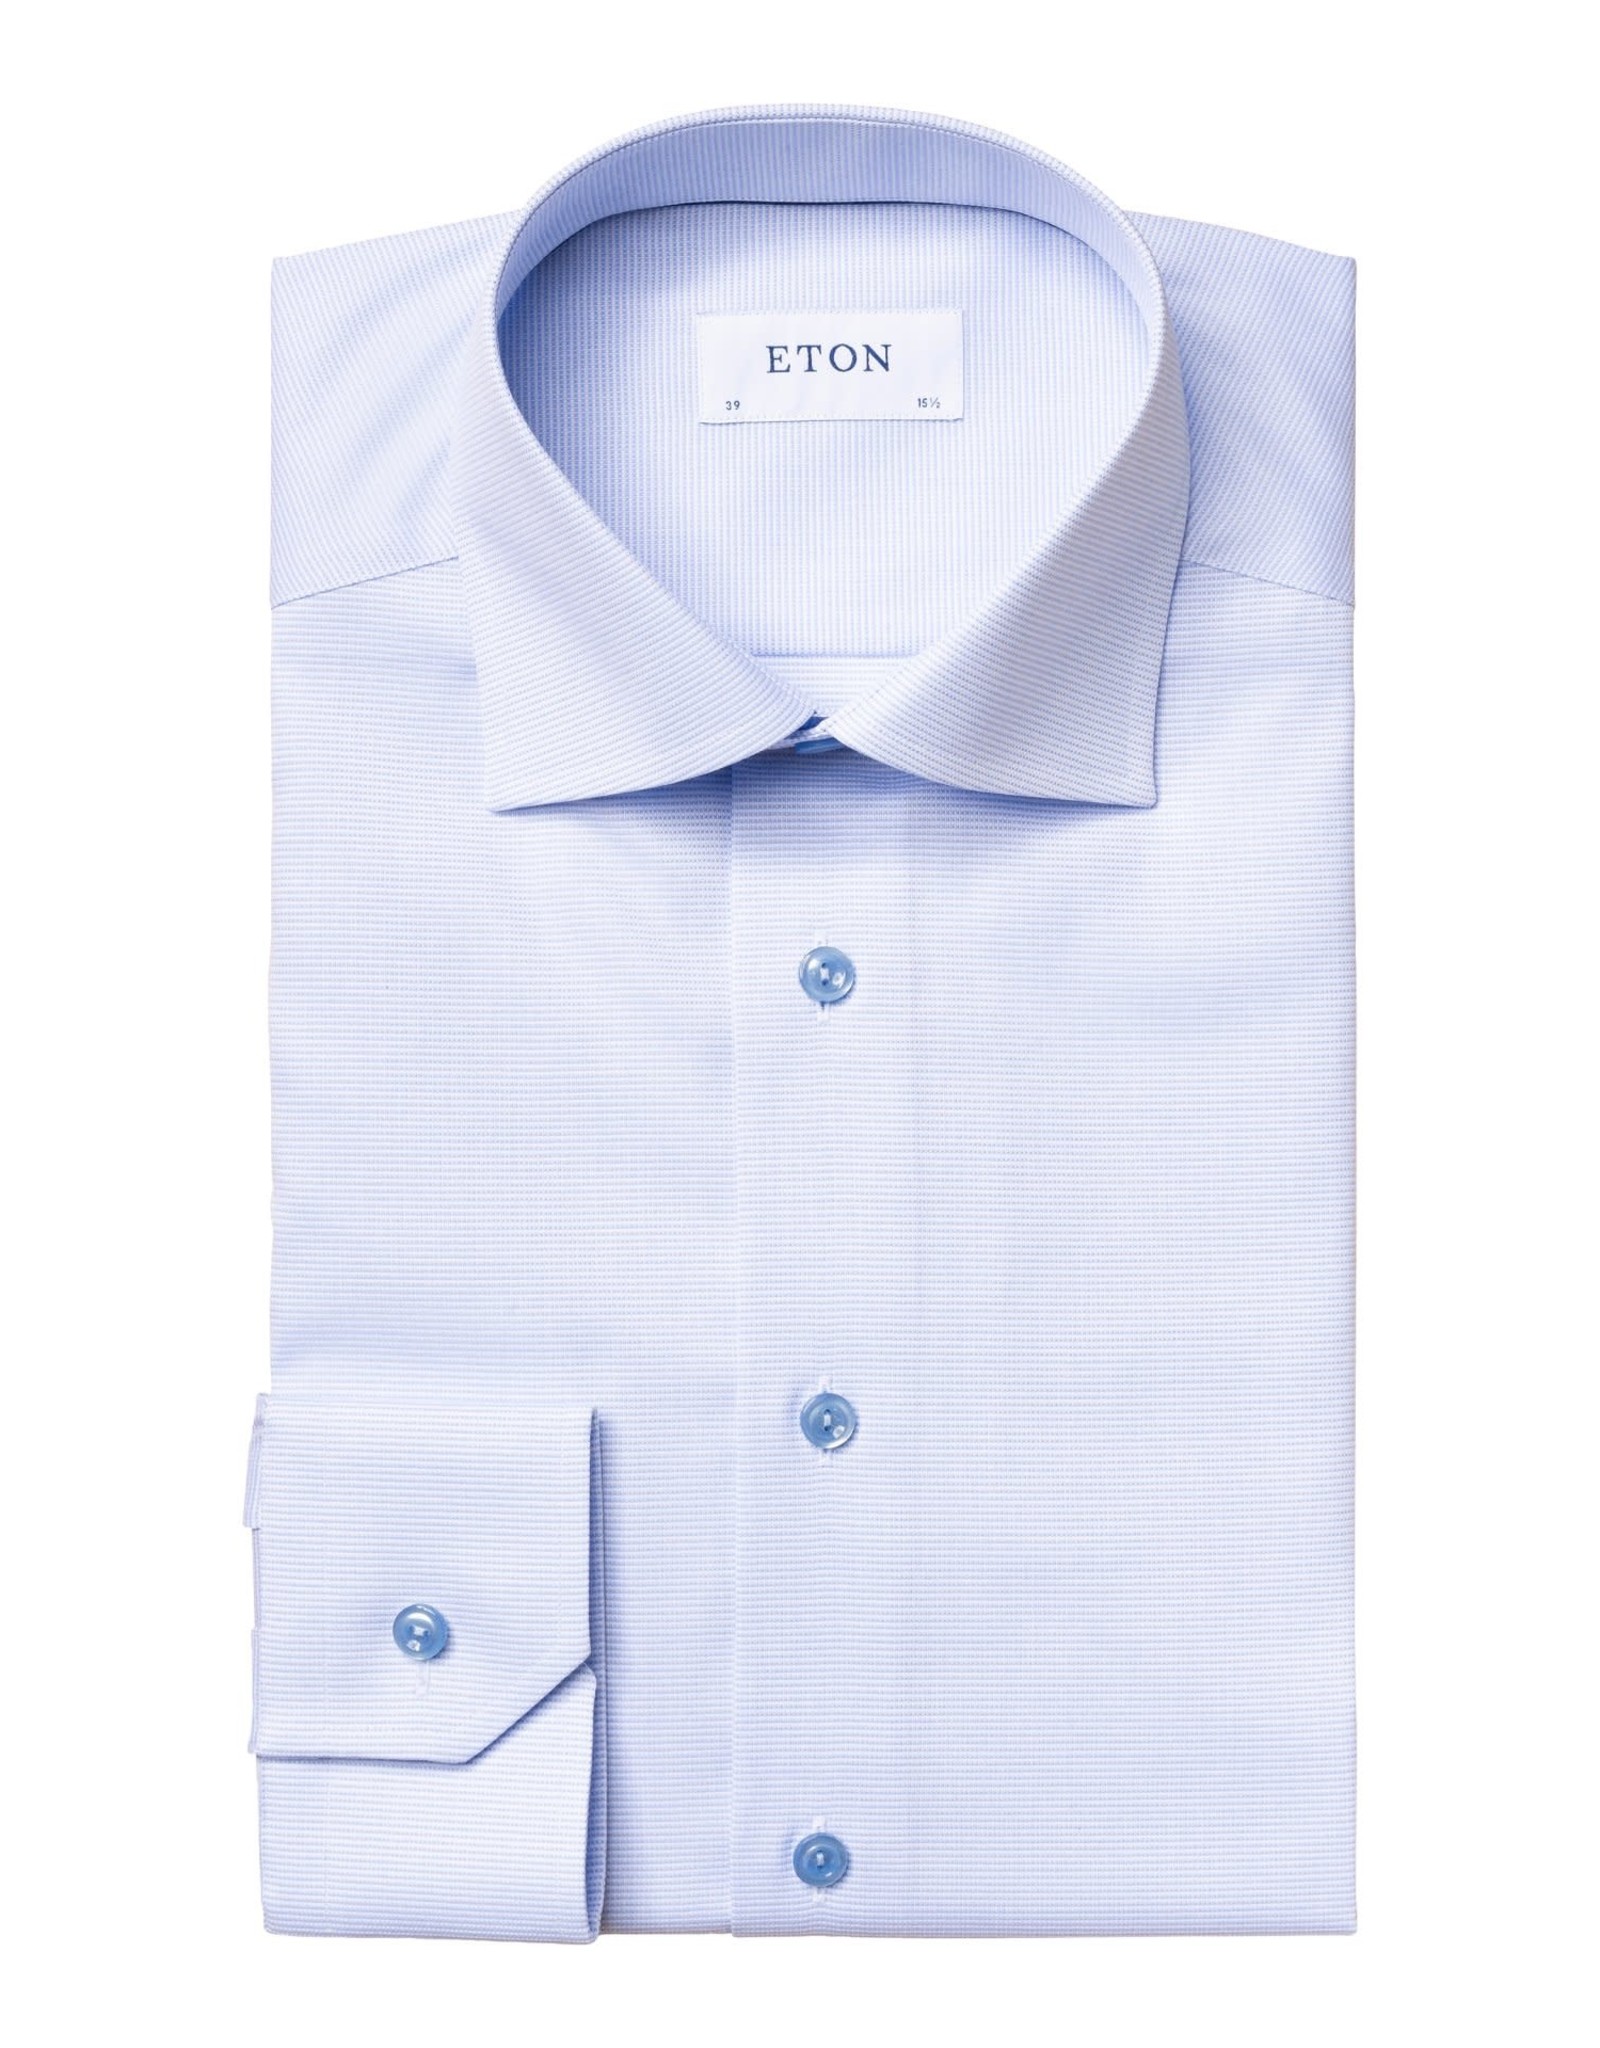 Eton Eton hemd blauw Contemporary 1769/21